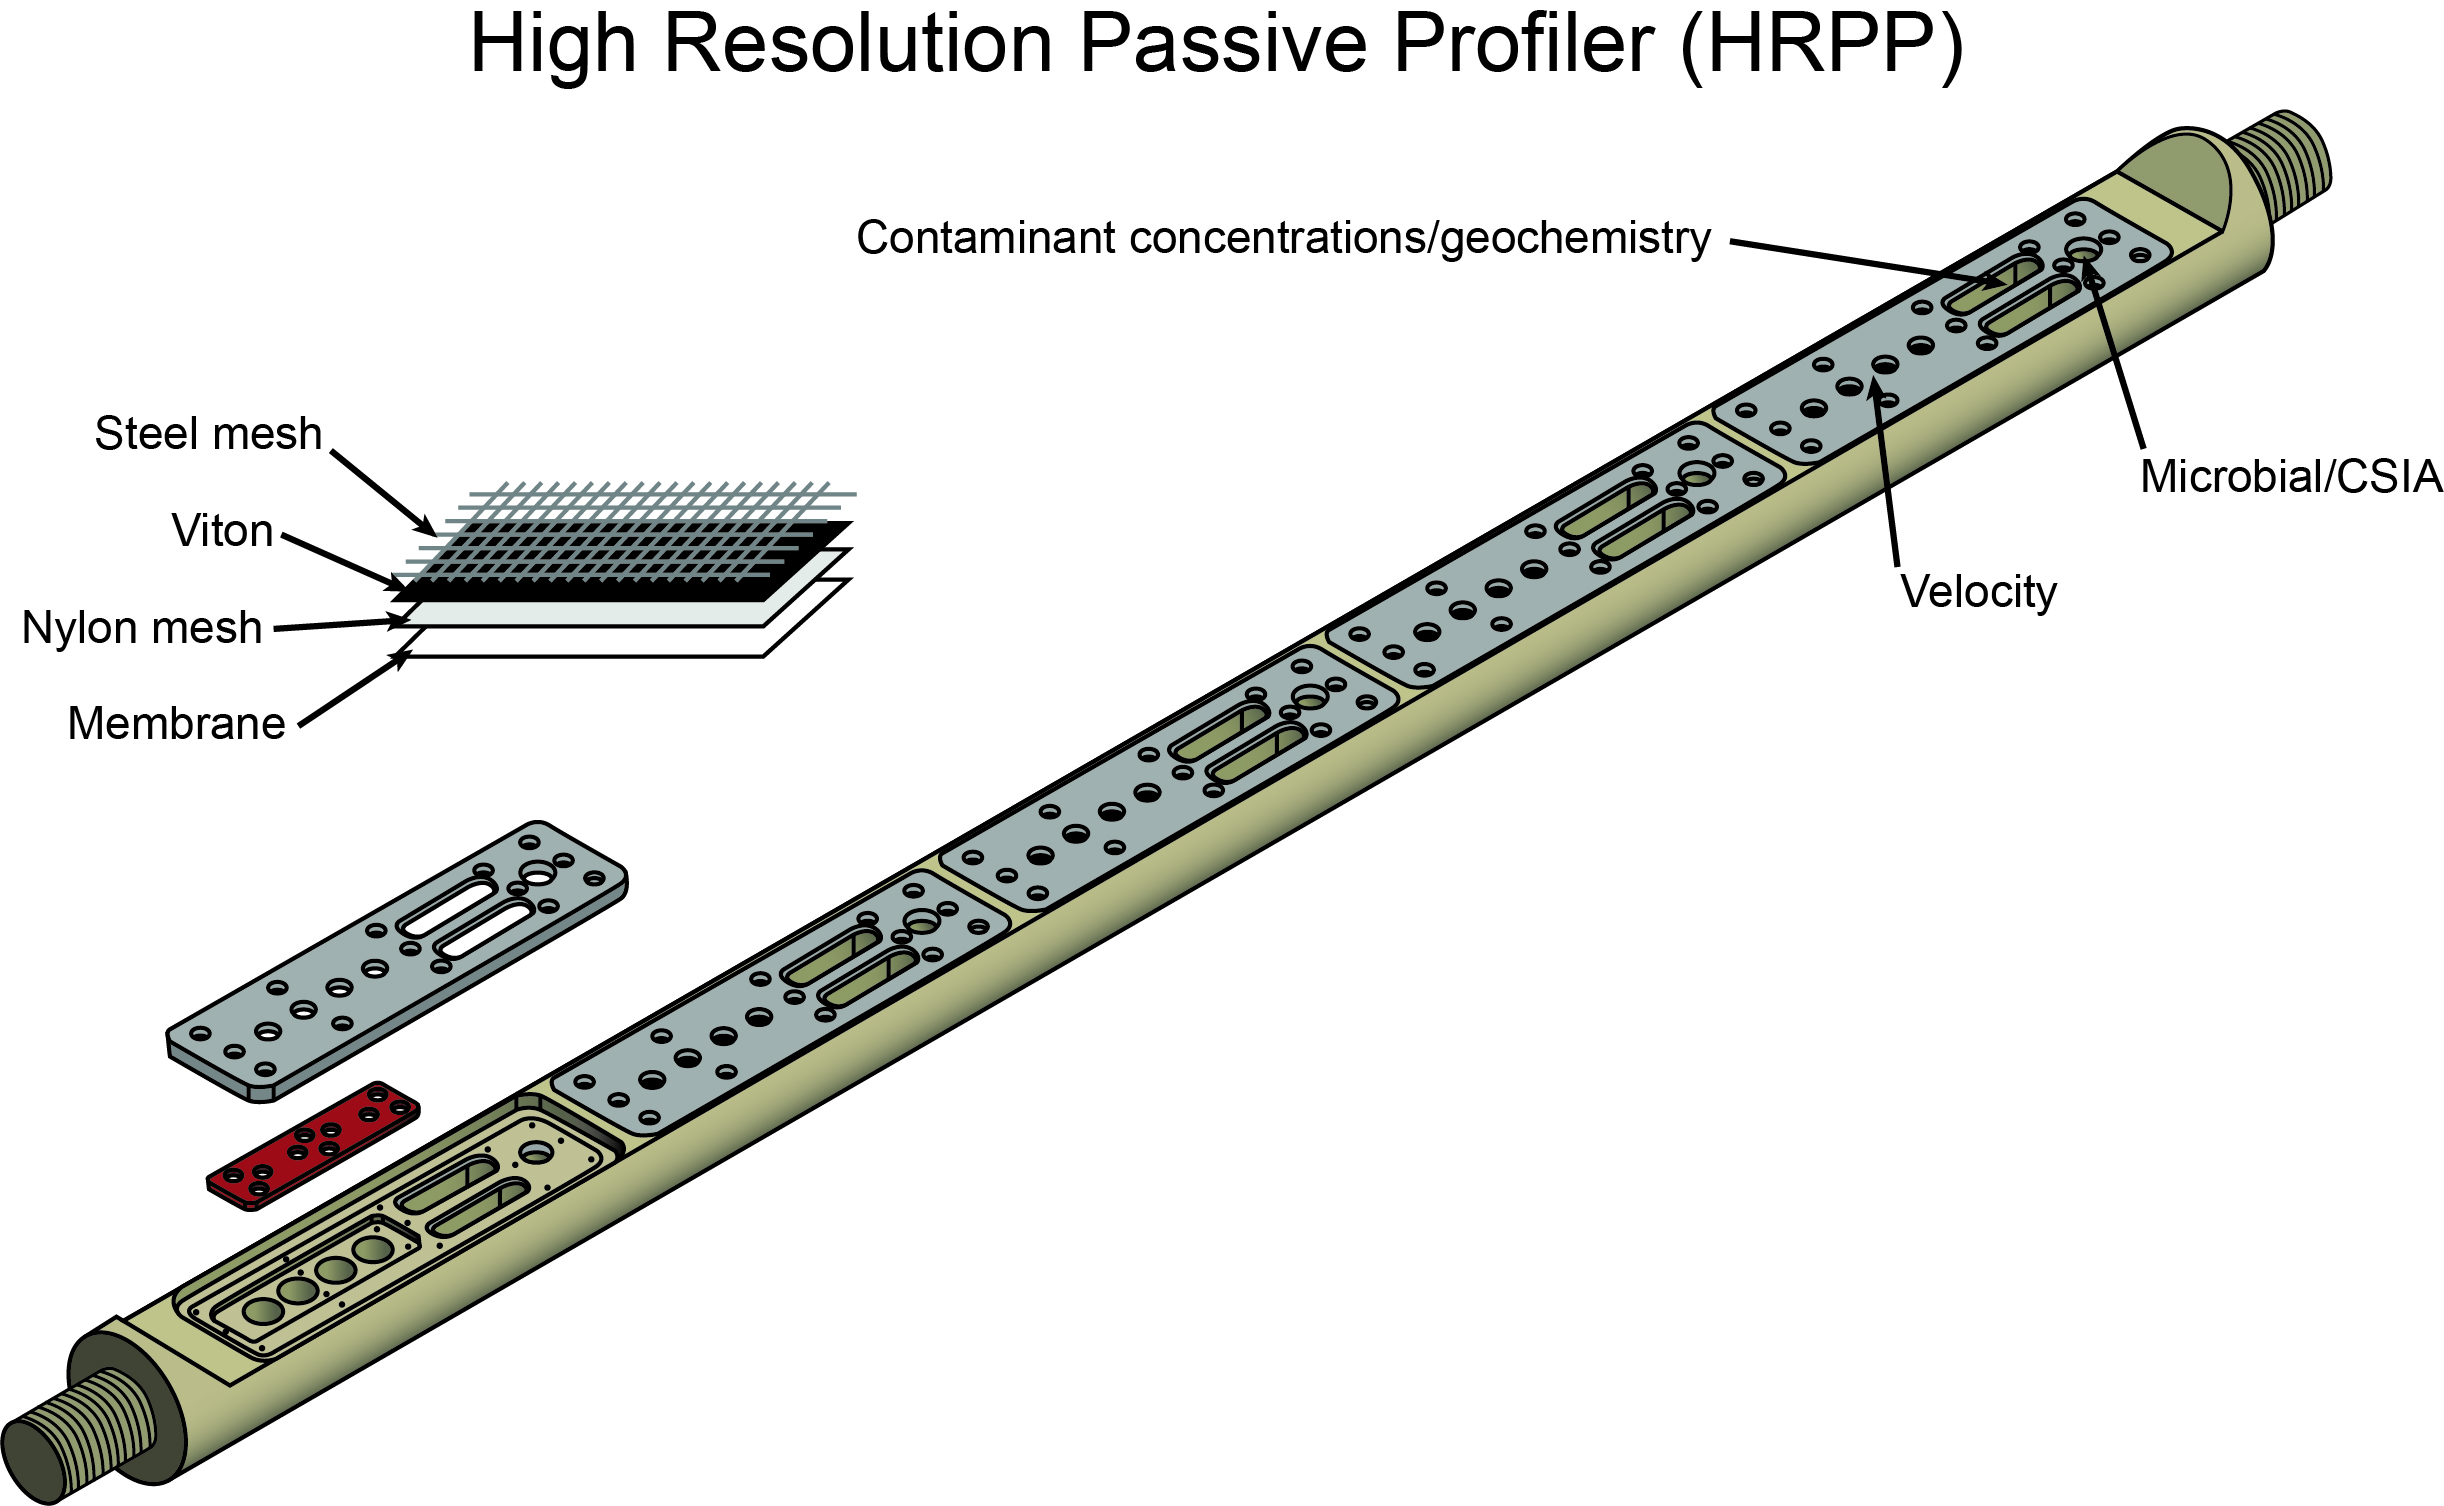 High Resolution Passive Profiler (HRPP)